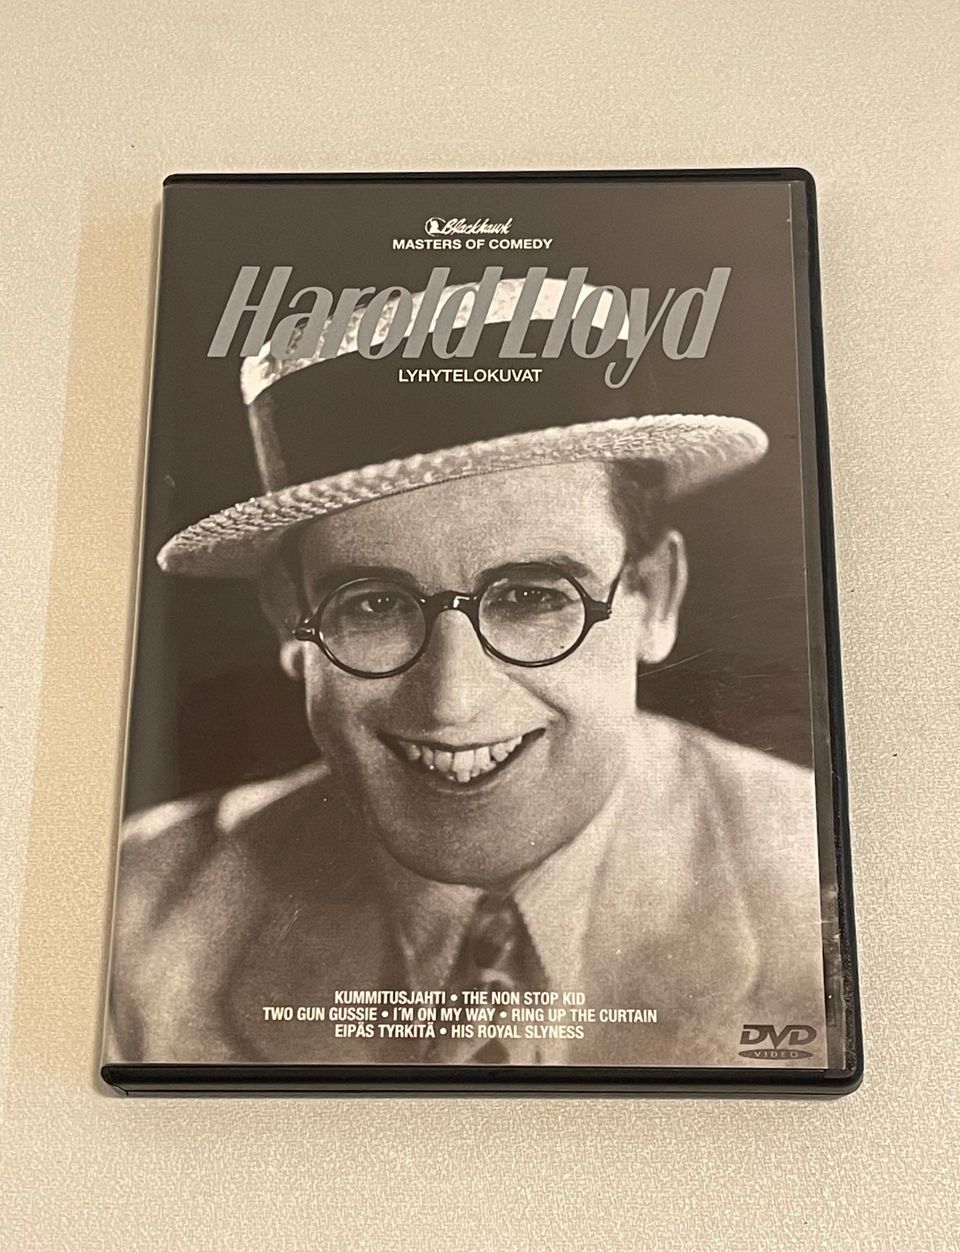 Harold Lloyd - lyhytelokuvat (DVD)